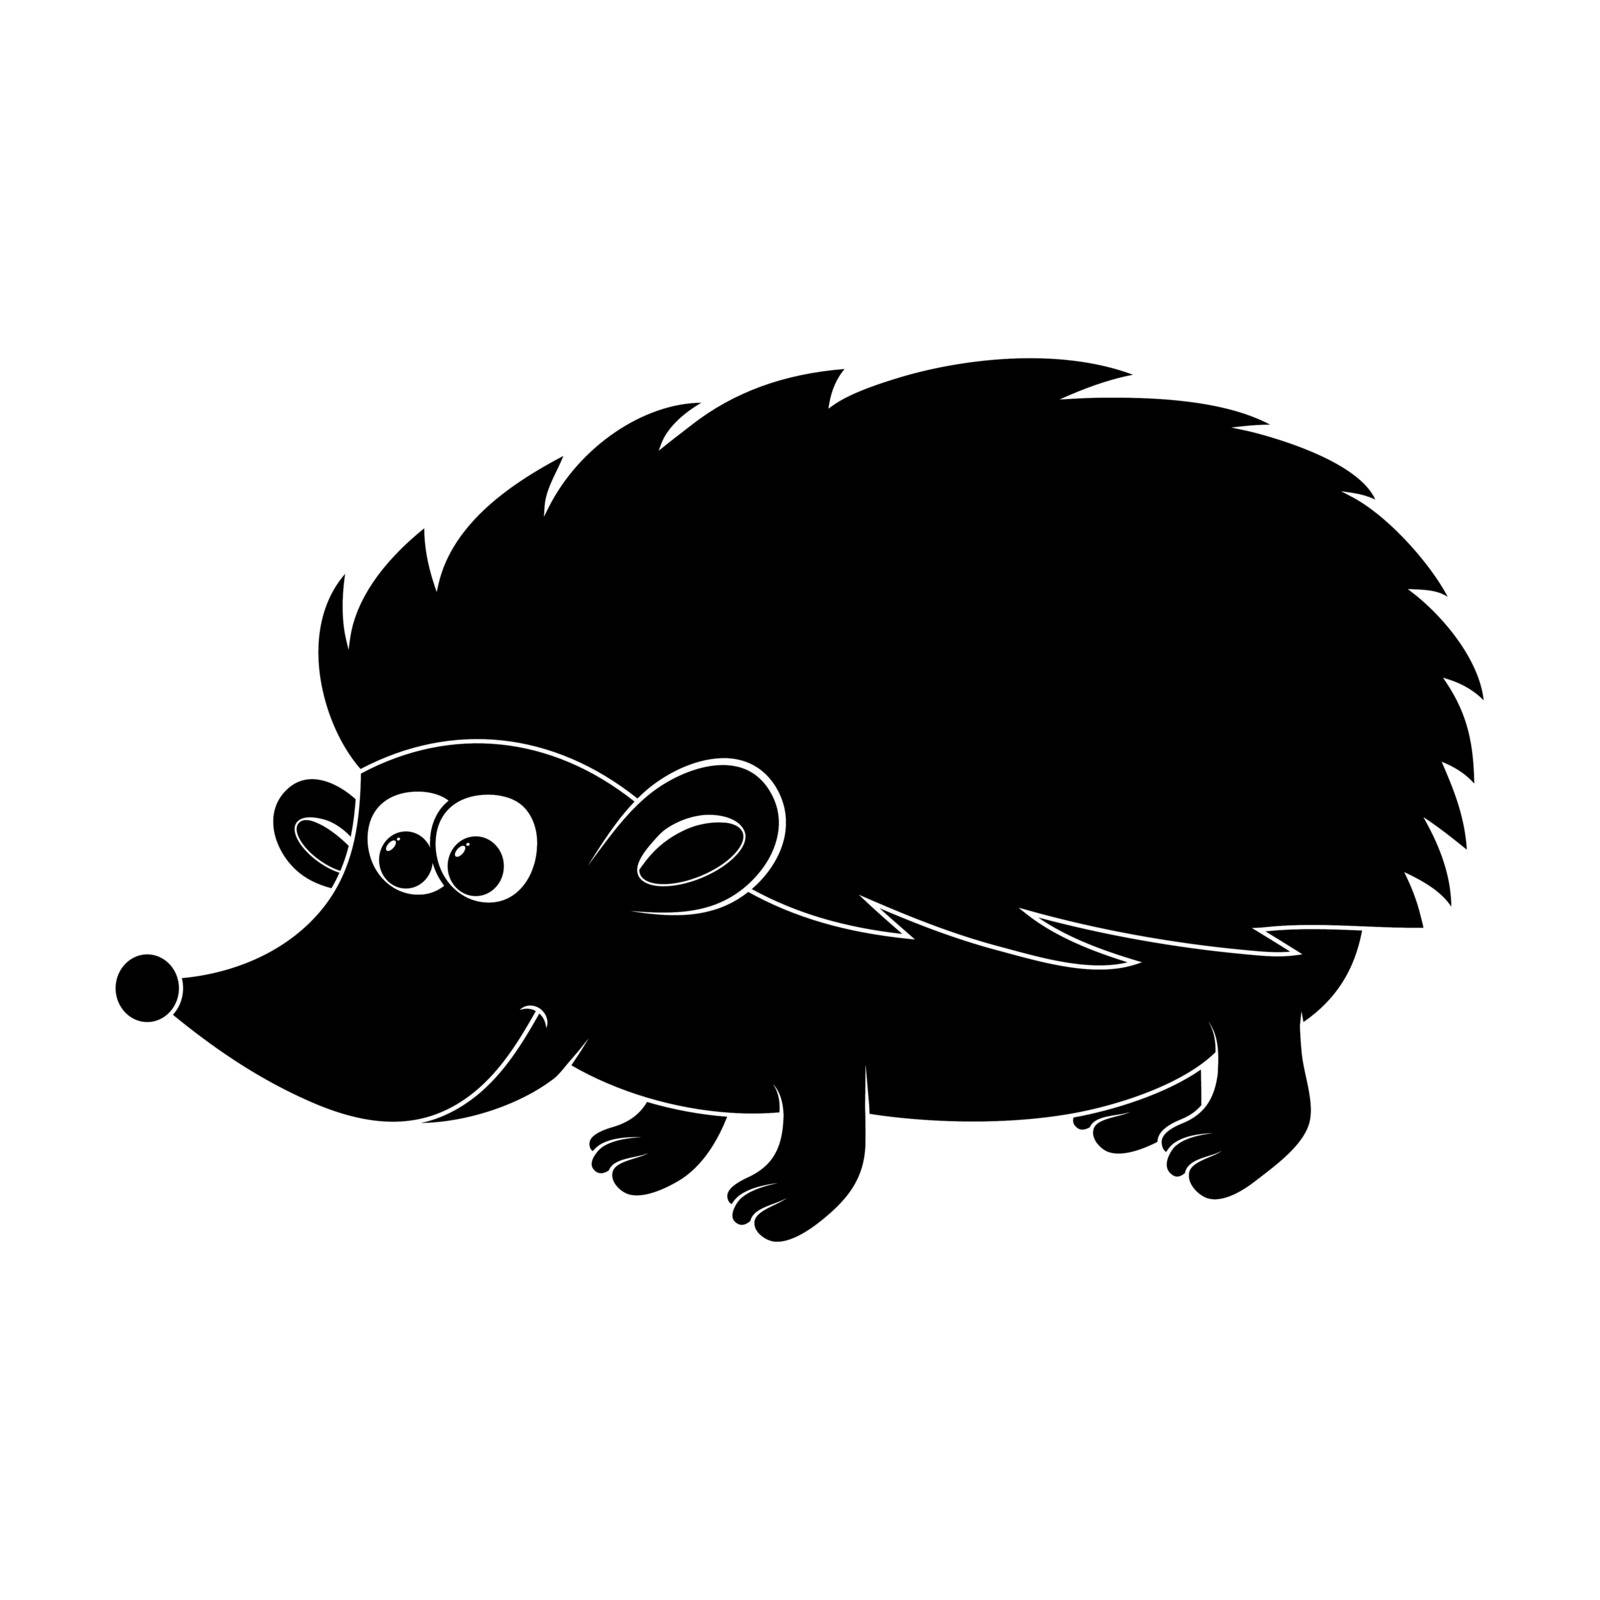 Hedgehog silhouette. Black and white autumnal shape for kids iso by wektorygrafika